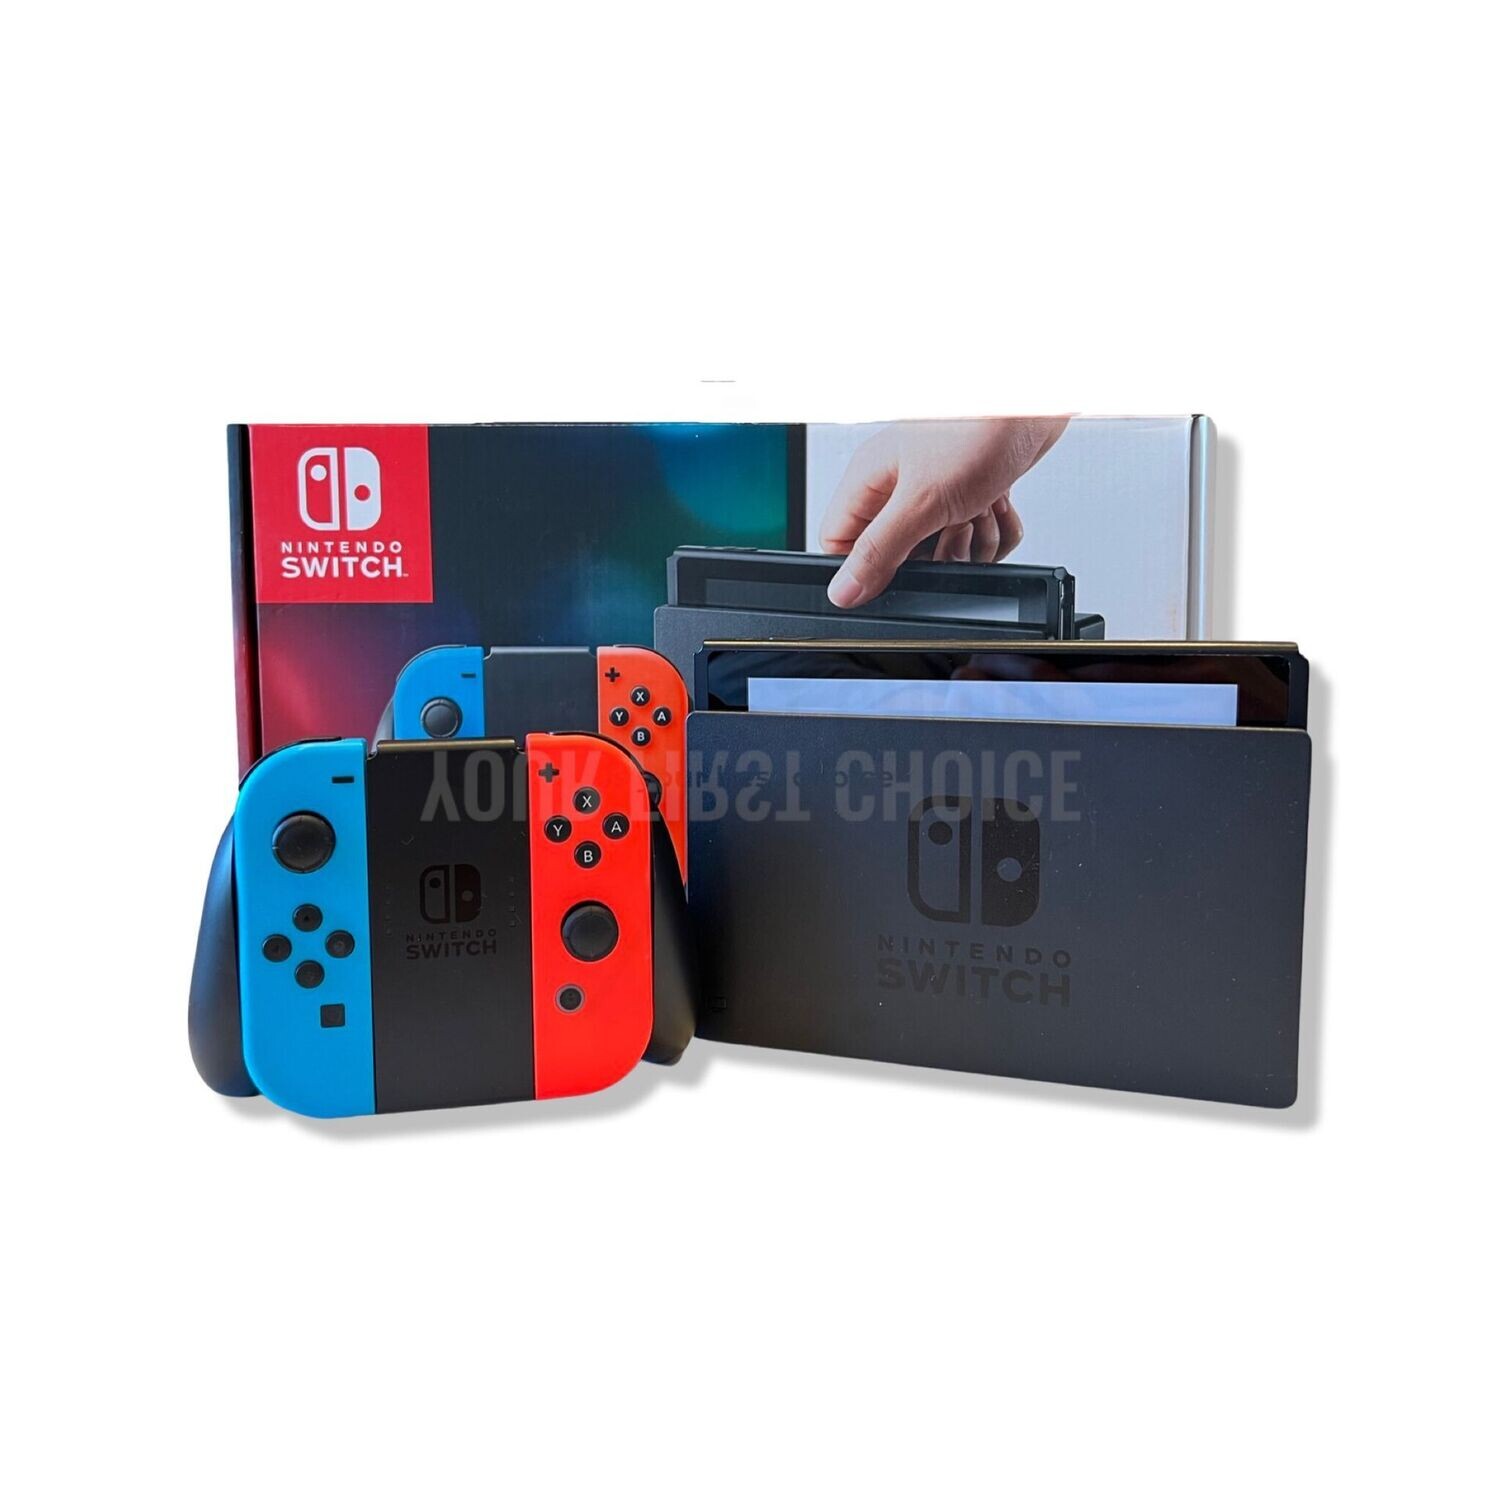 Nintendo Switch Konsole V1 - CFW Fähig - Neon-Rot/Neon-Blau